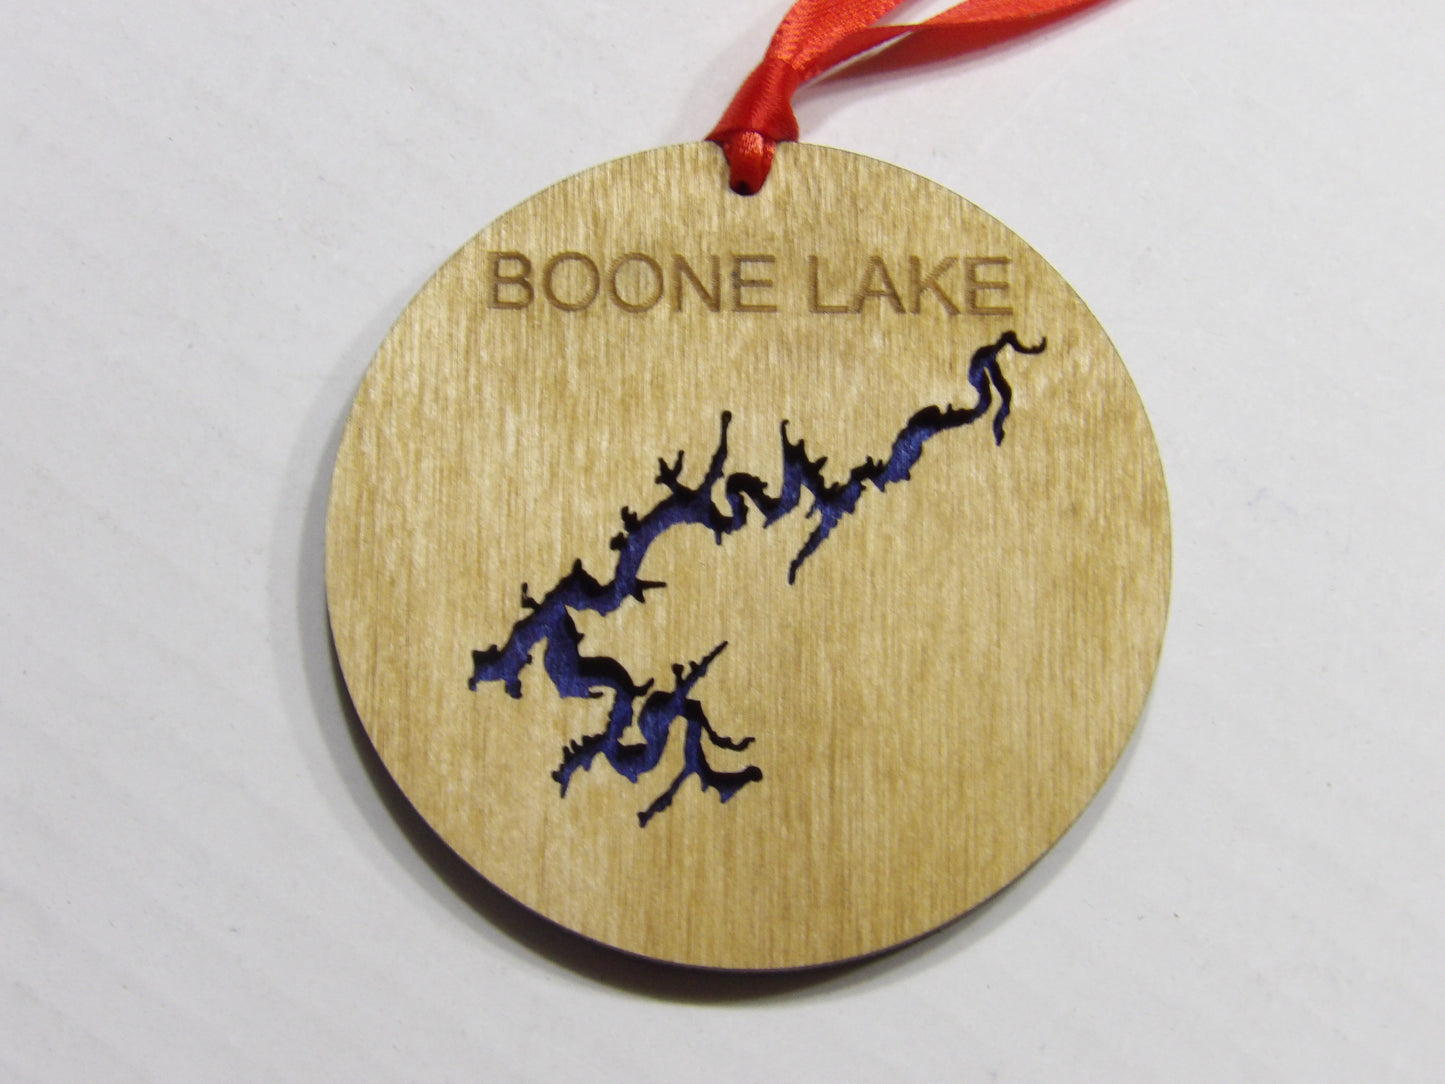 Lake Map Ornaments